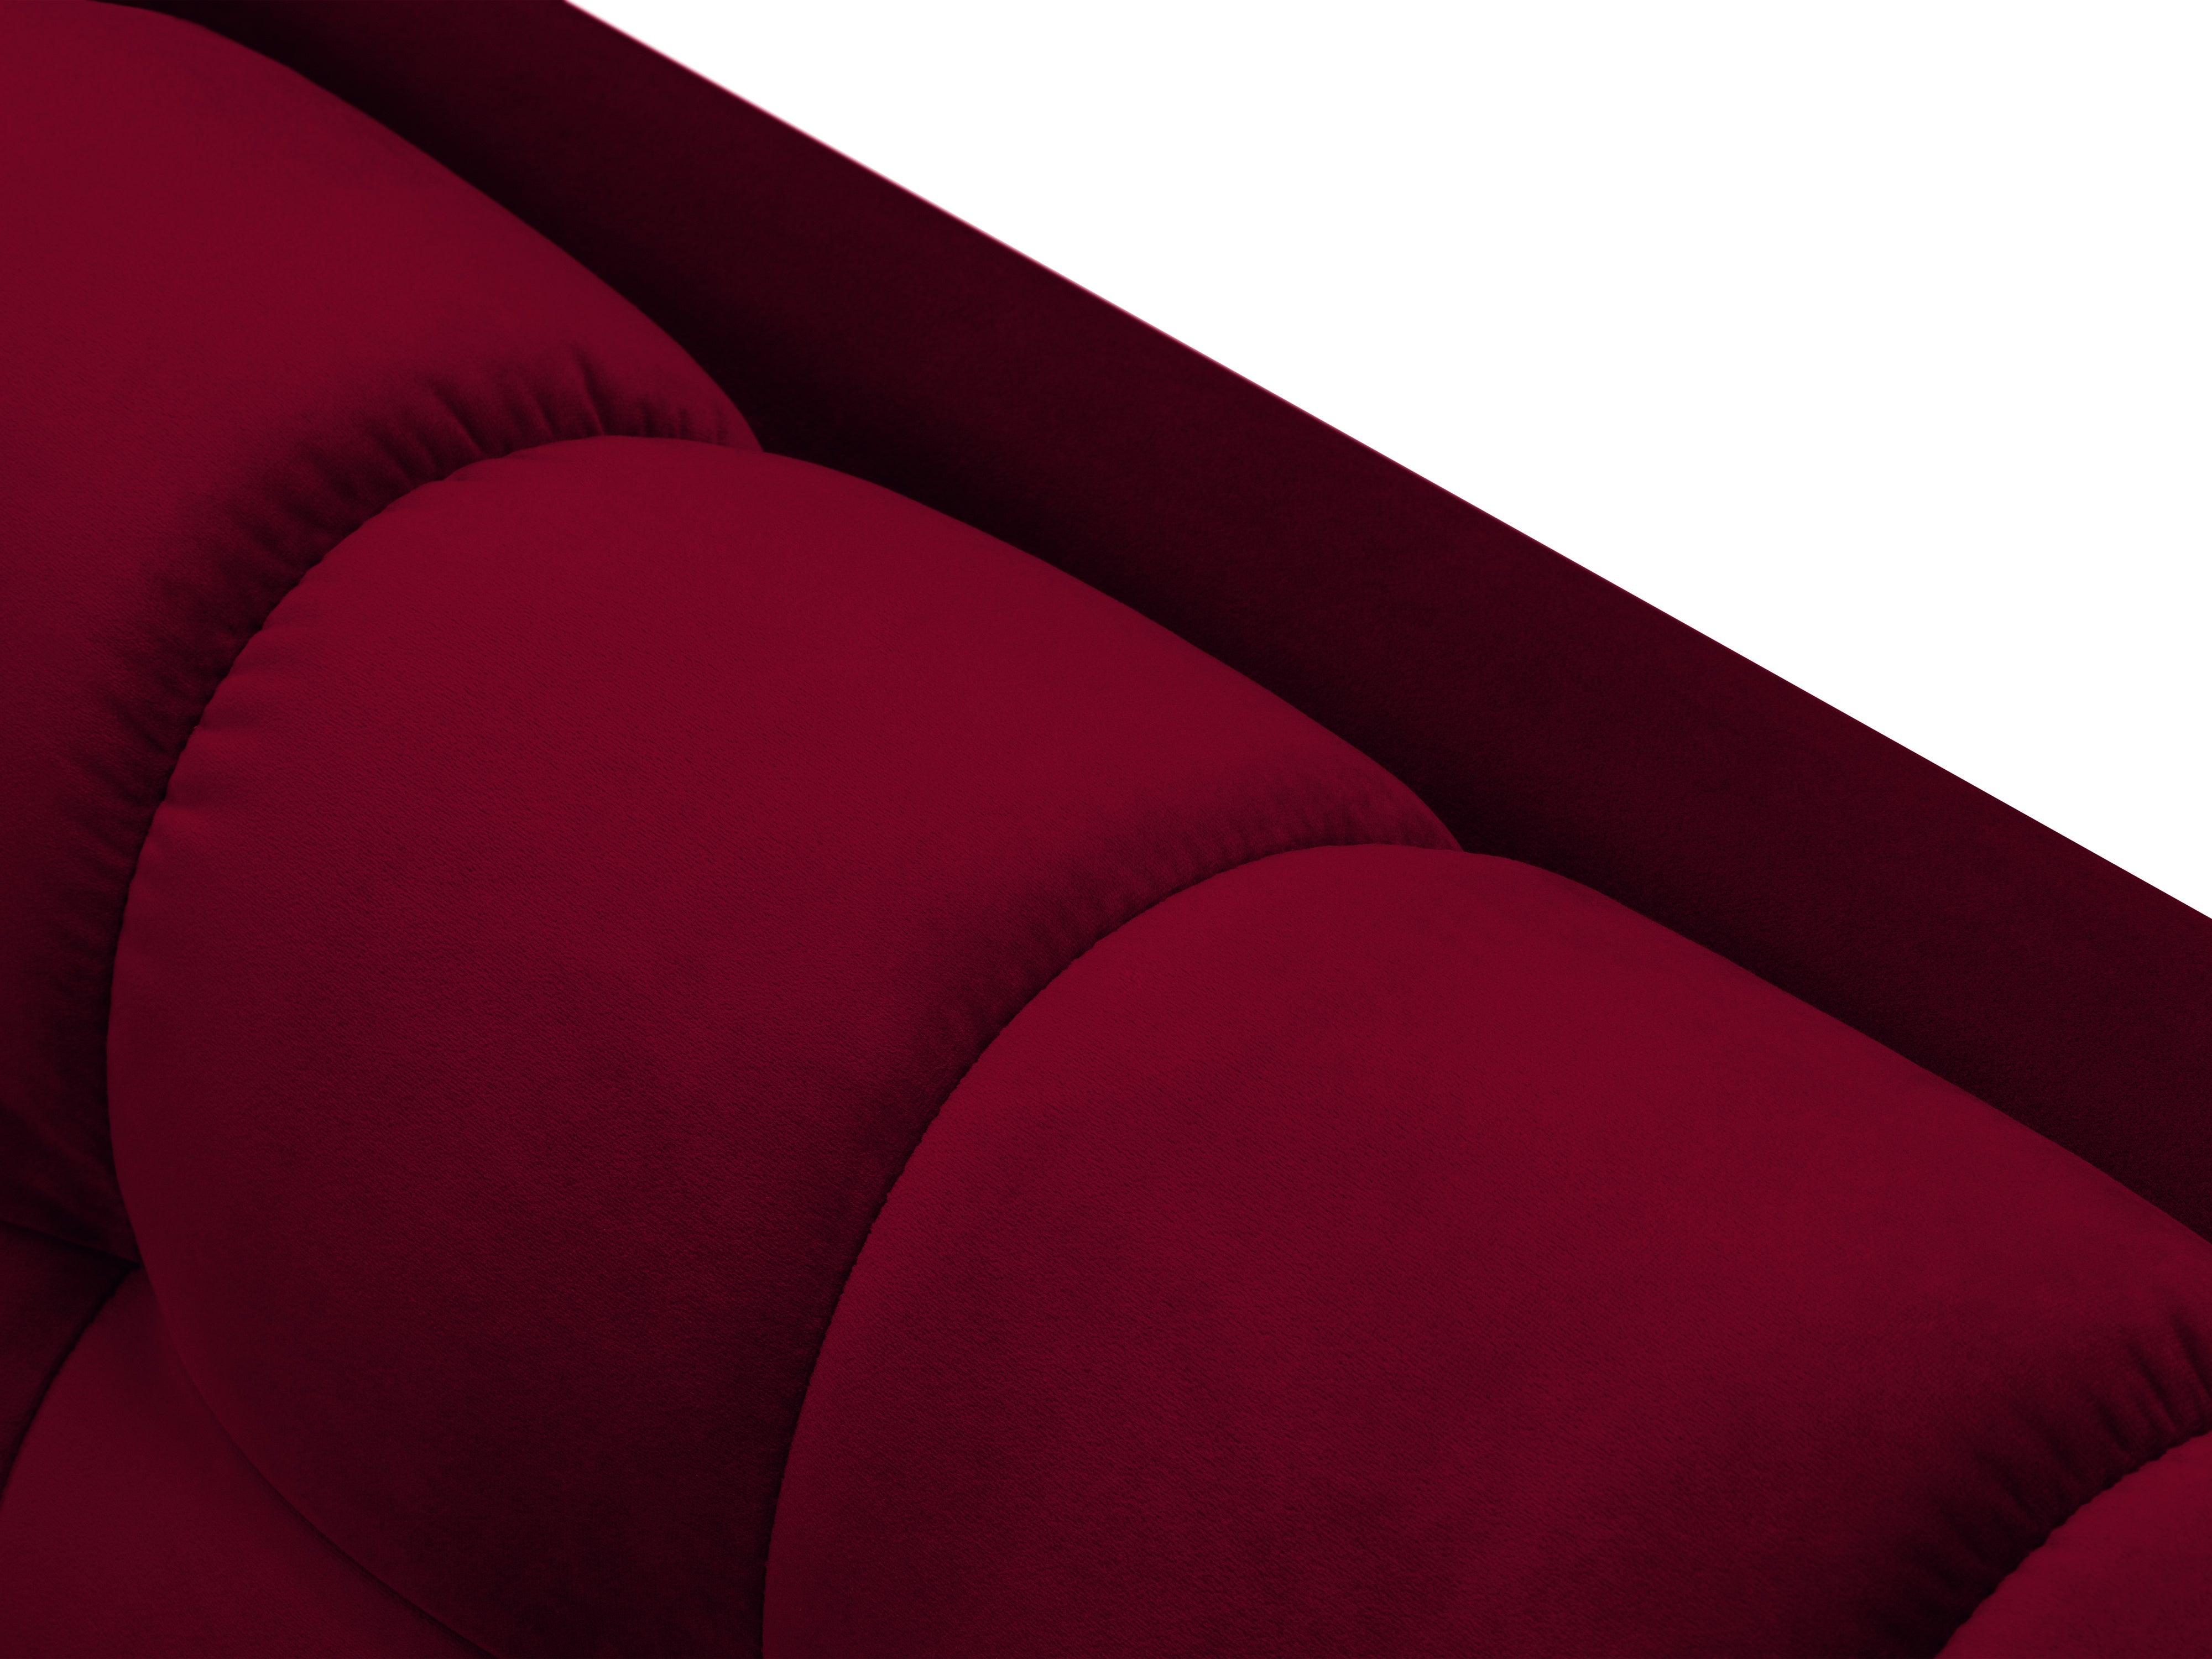 quilted velvet red backrest